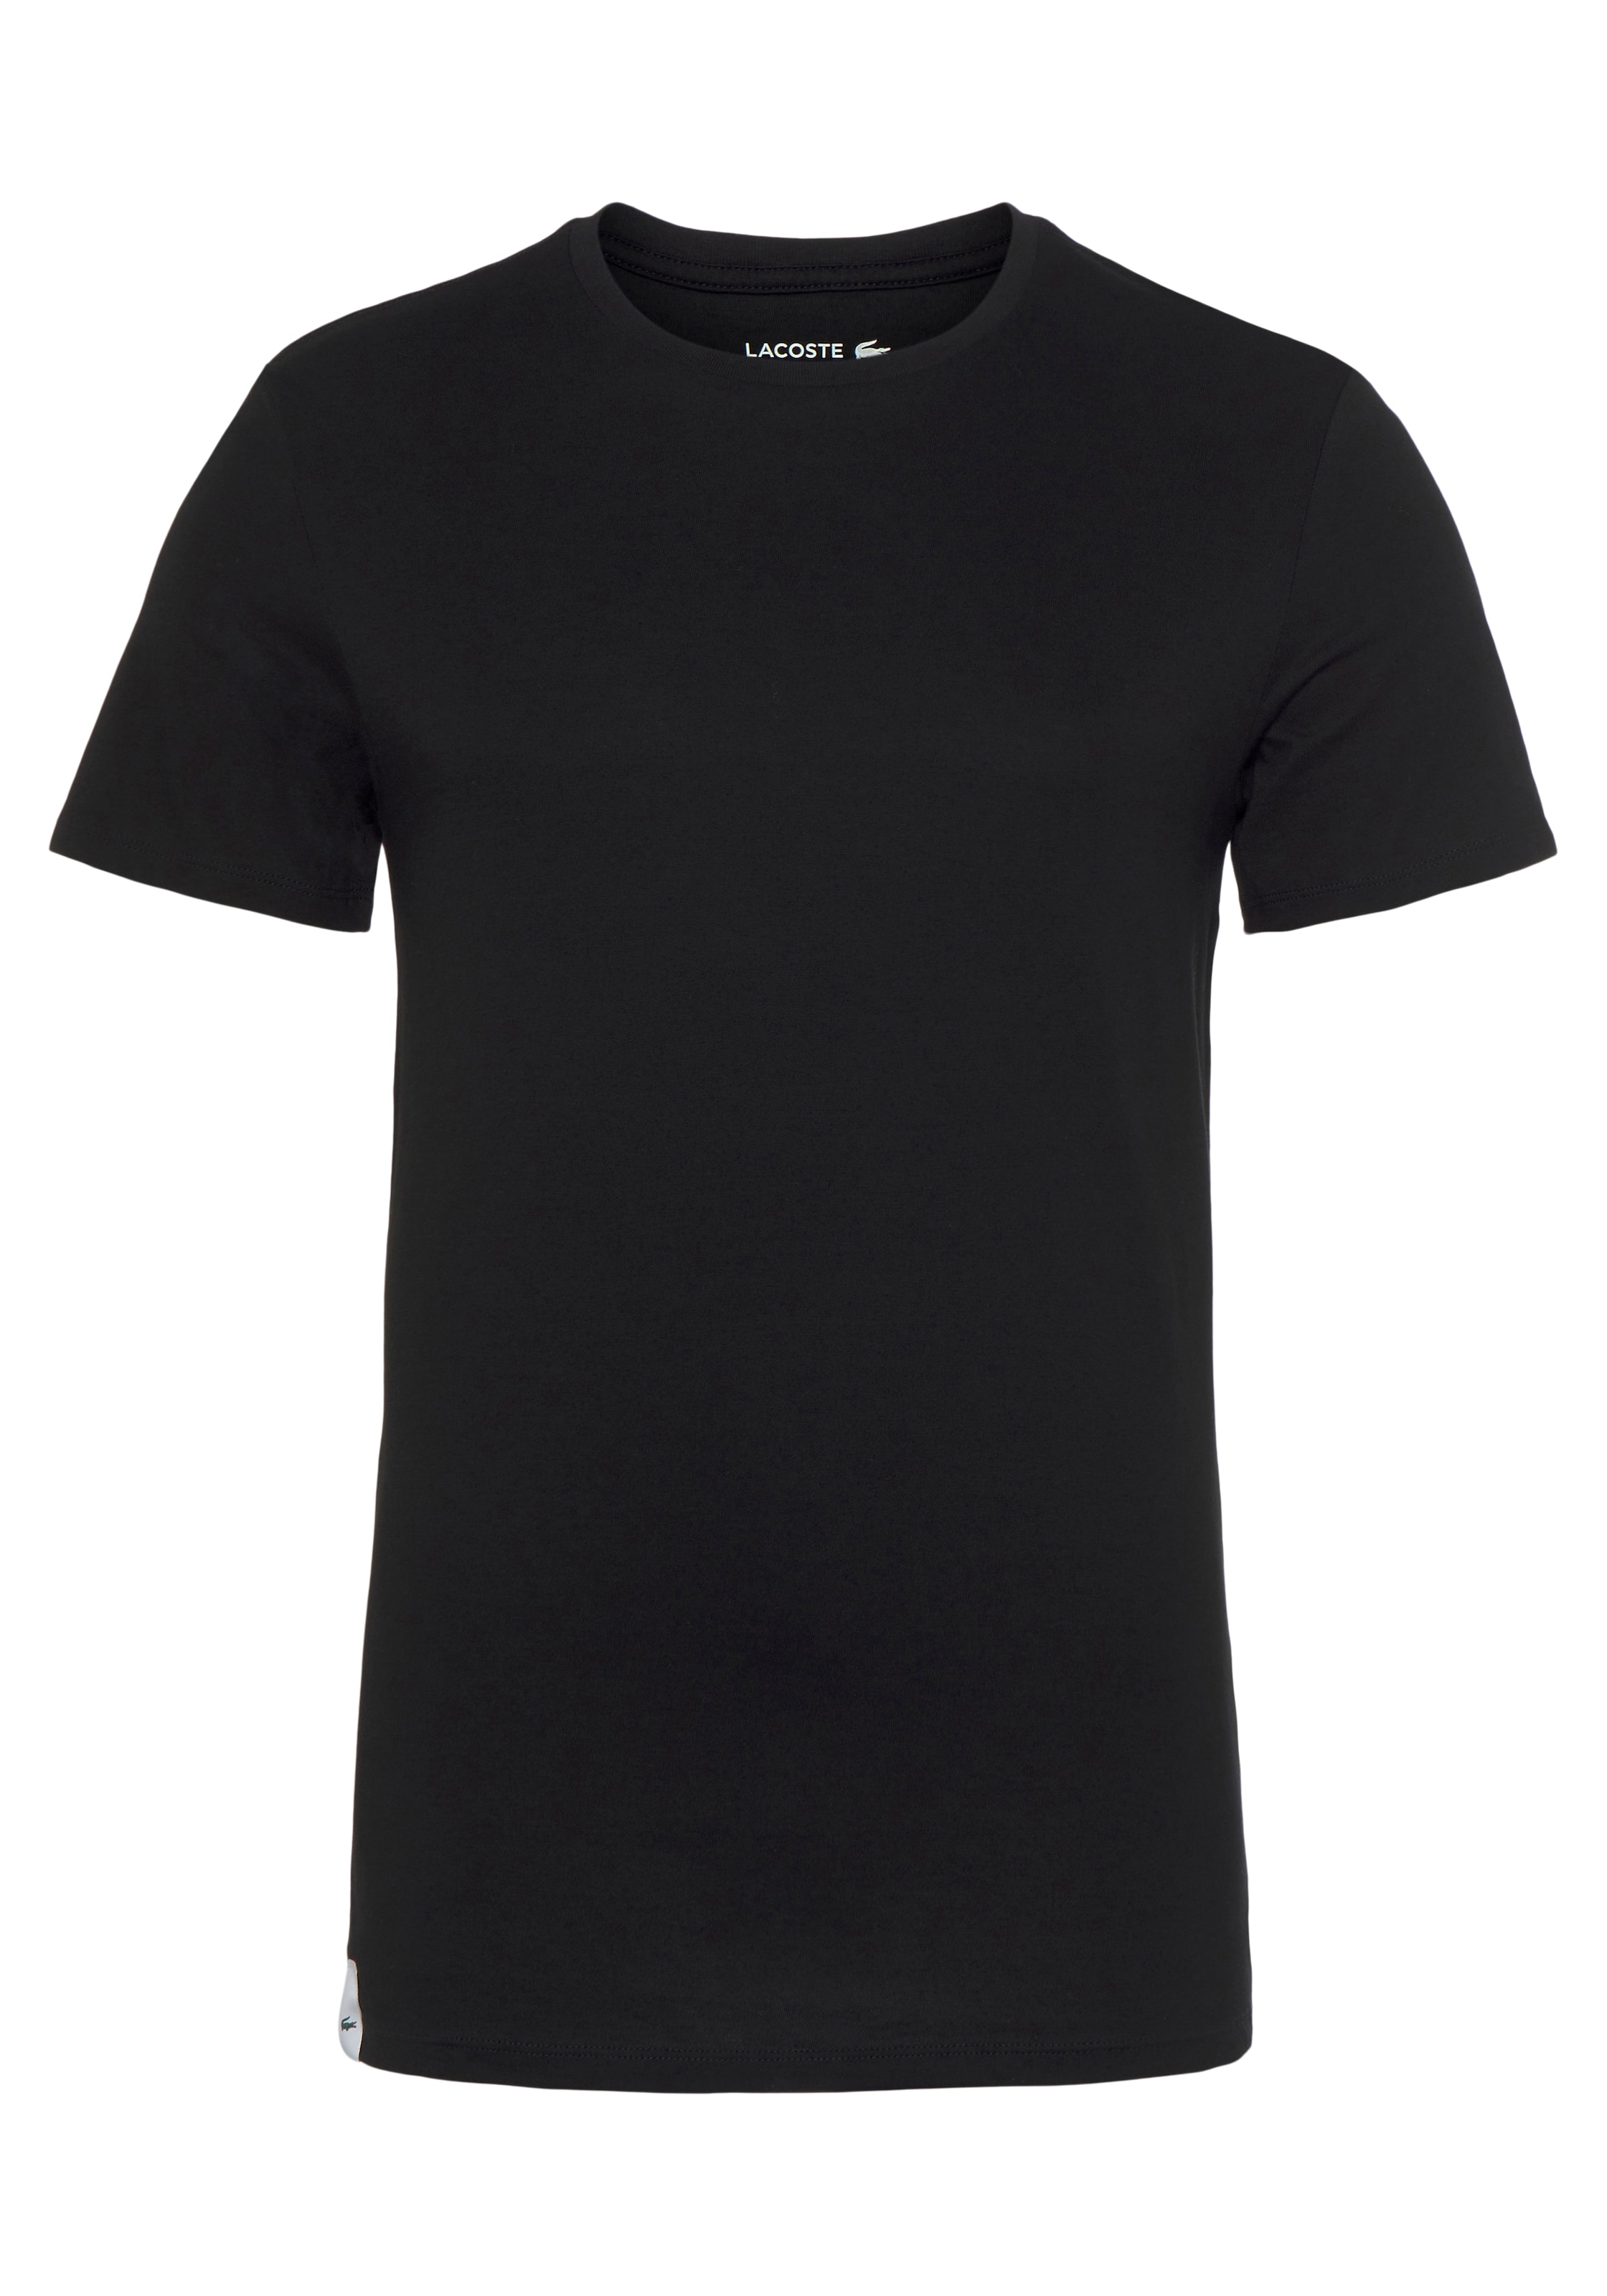 Lacoste T-Shirt, Atmungsaktives Baumwollmaterial für angenehmes Hautgefühl